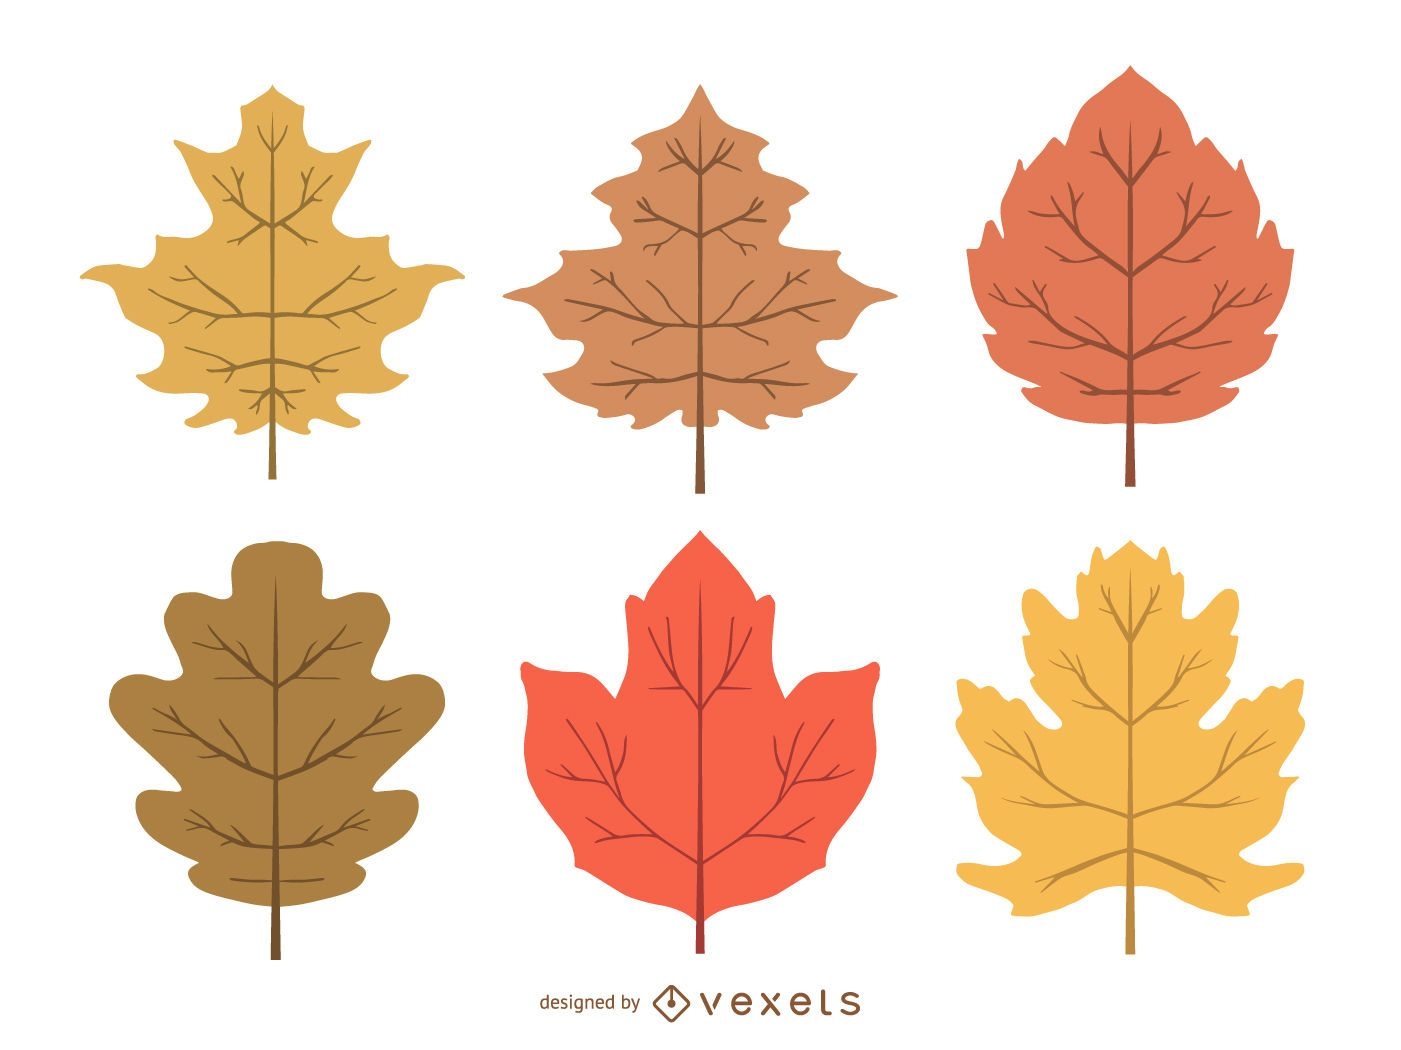 Delicate autumn leaves illustration set